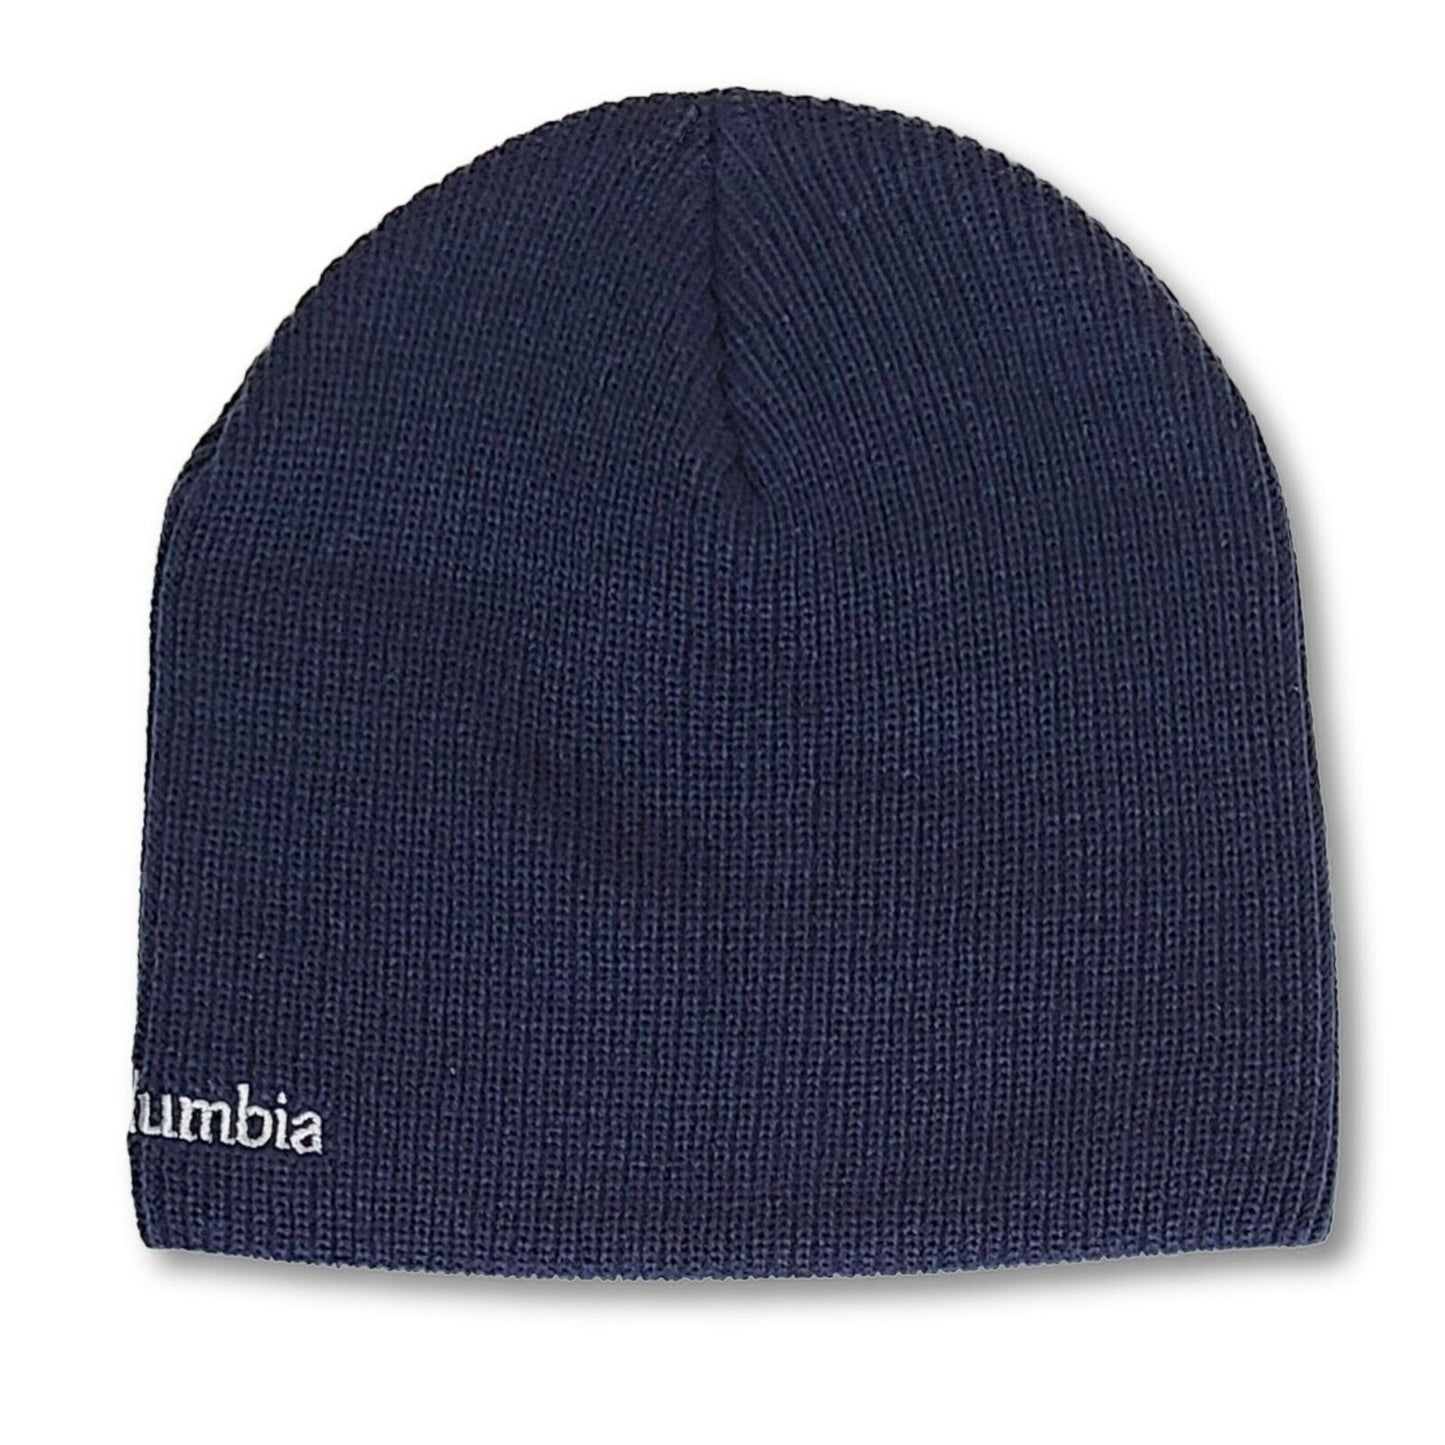 Columbia Men's Ribbed Knit Logo Beanie Hat